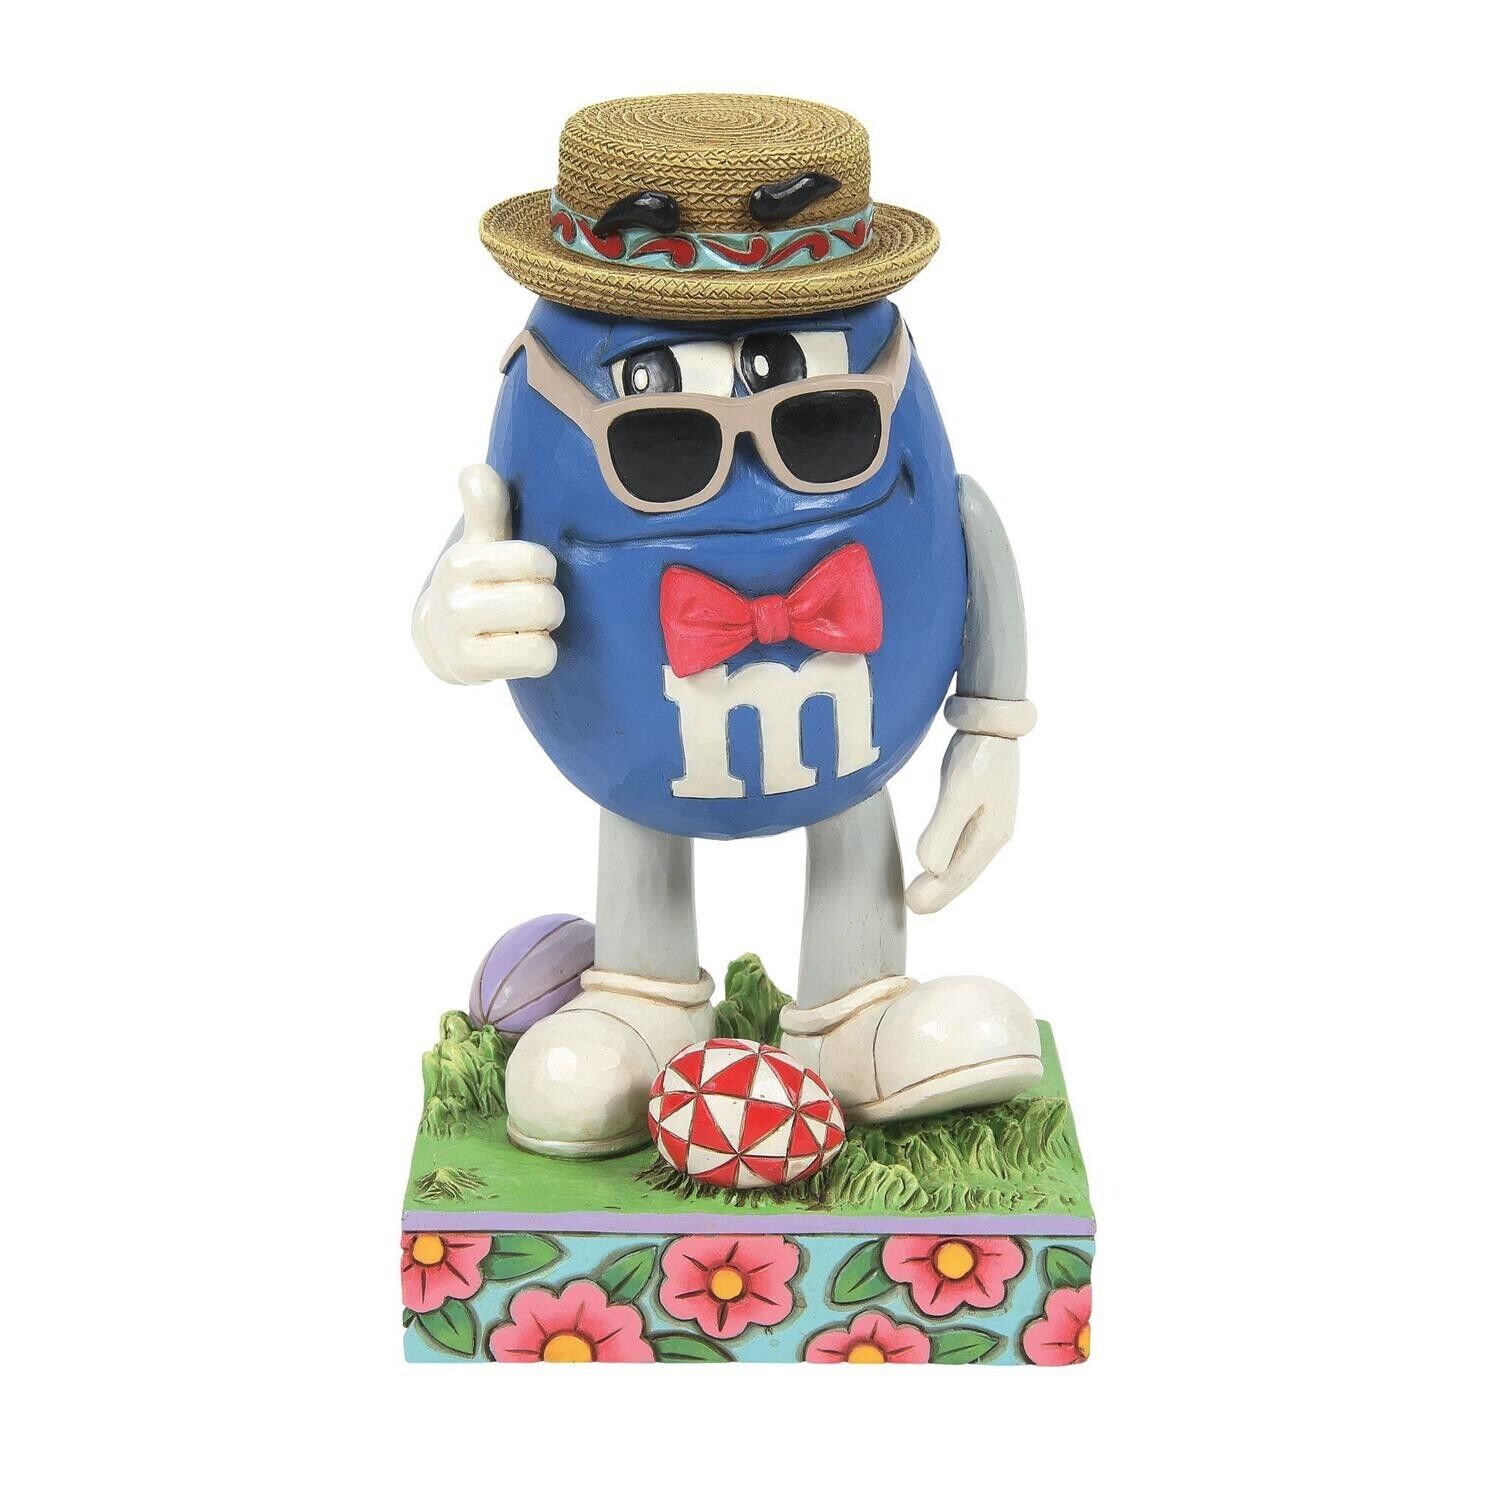 Jim Shore M&M'S Collection - It's Easter Dude - Blue Character w/Bowtie 6014811